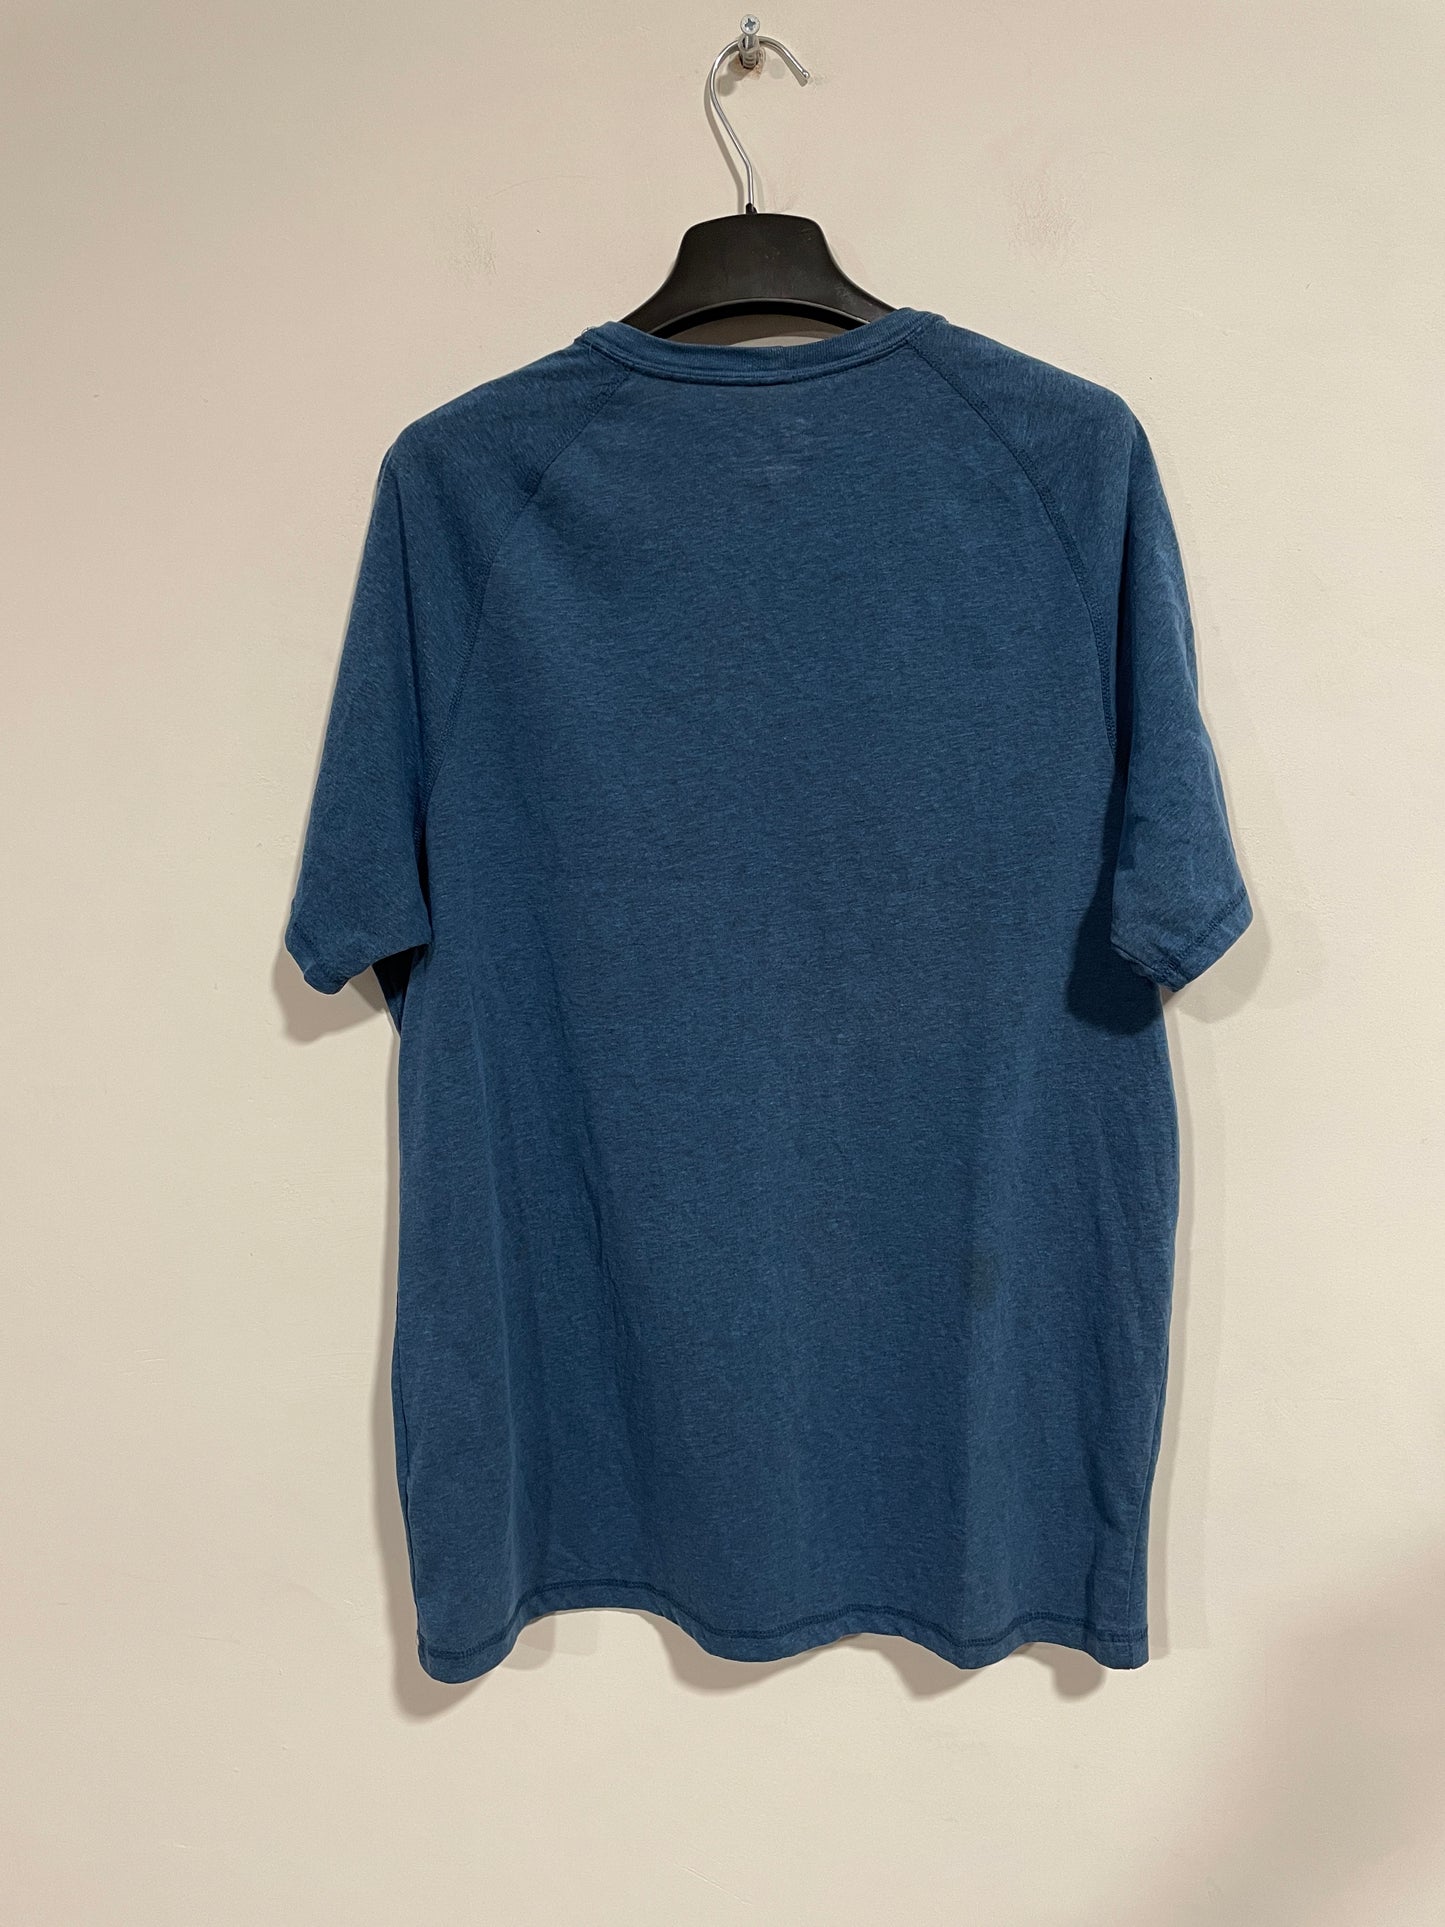 T shirt Carhartt workwear (MR120)